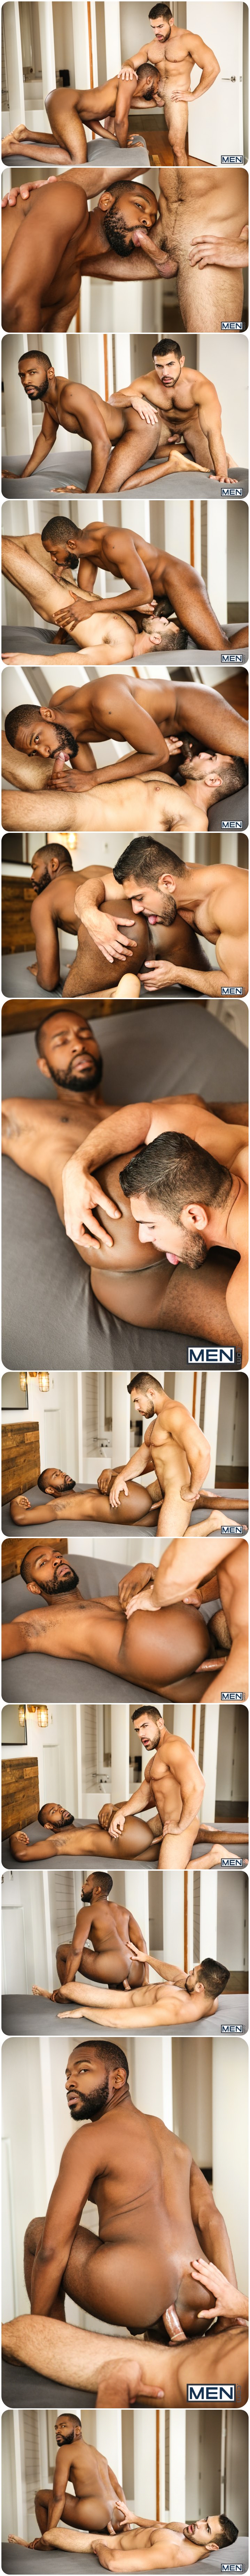 Men.com, Str8 To Gay, Lawrence Portland, Damien Stone